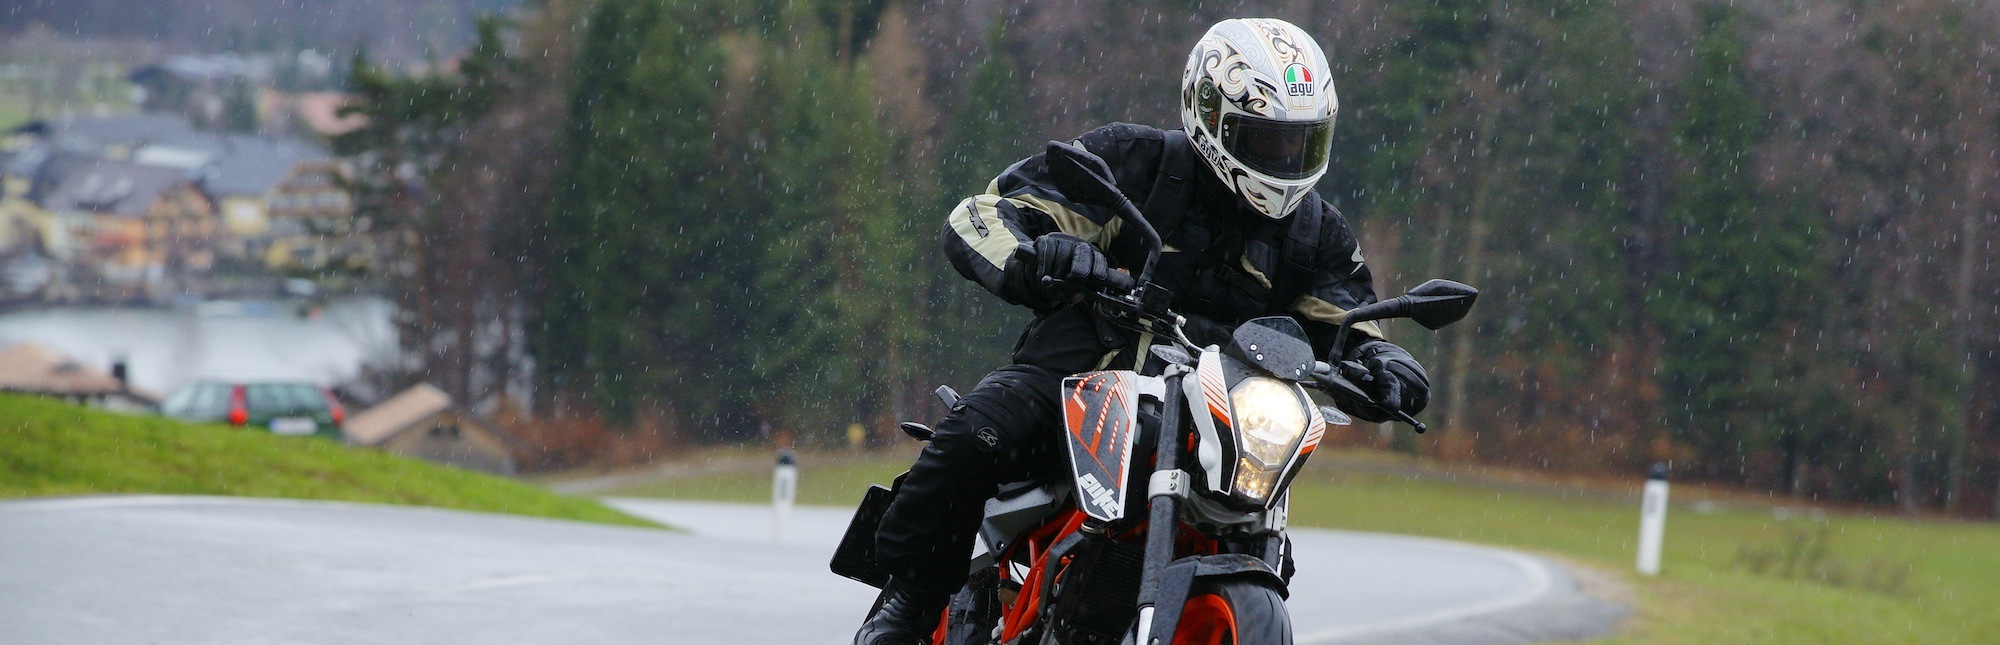 Motorcycle Helmet & Leathers Cover